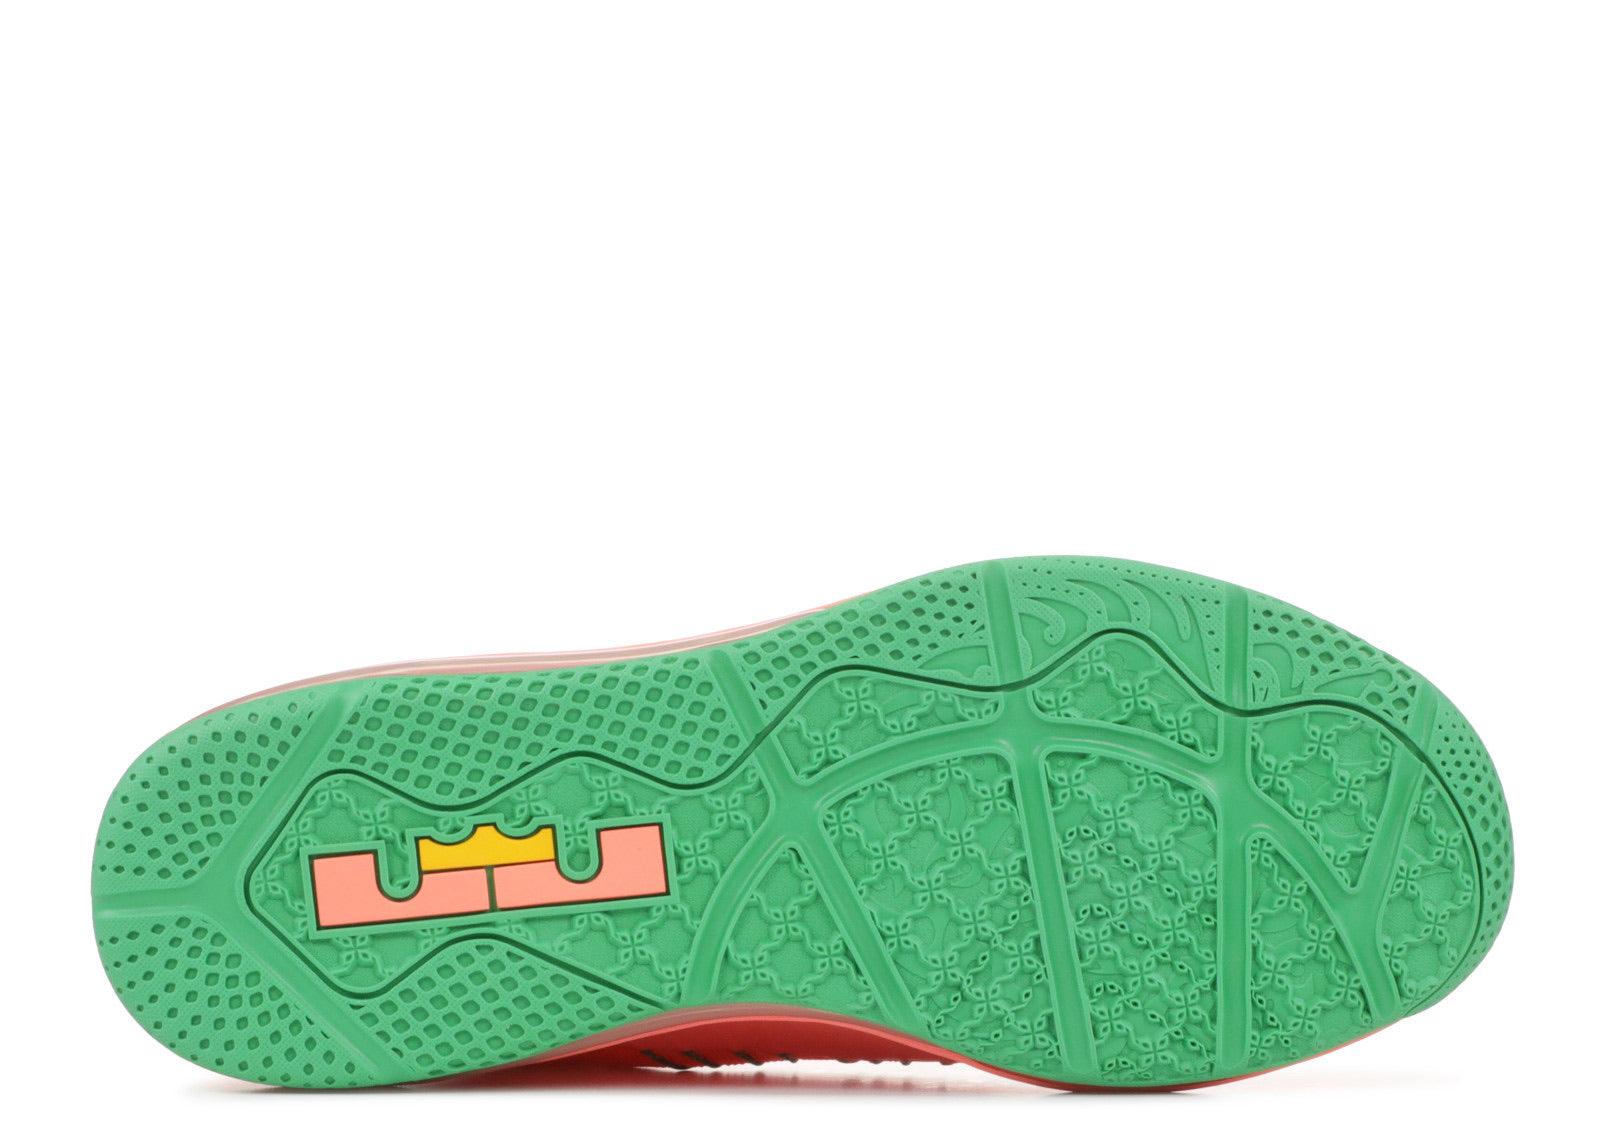 Nike Air Max LeBron 10 Low “Watermelon” - KicksOfAmerica